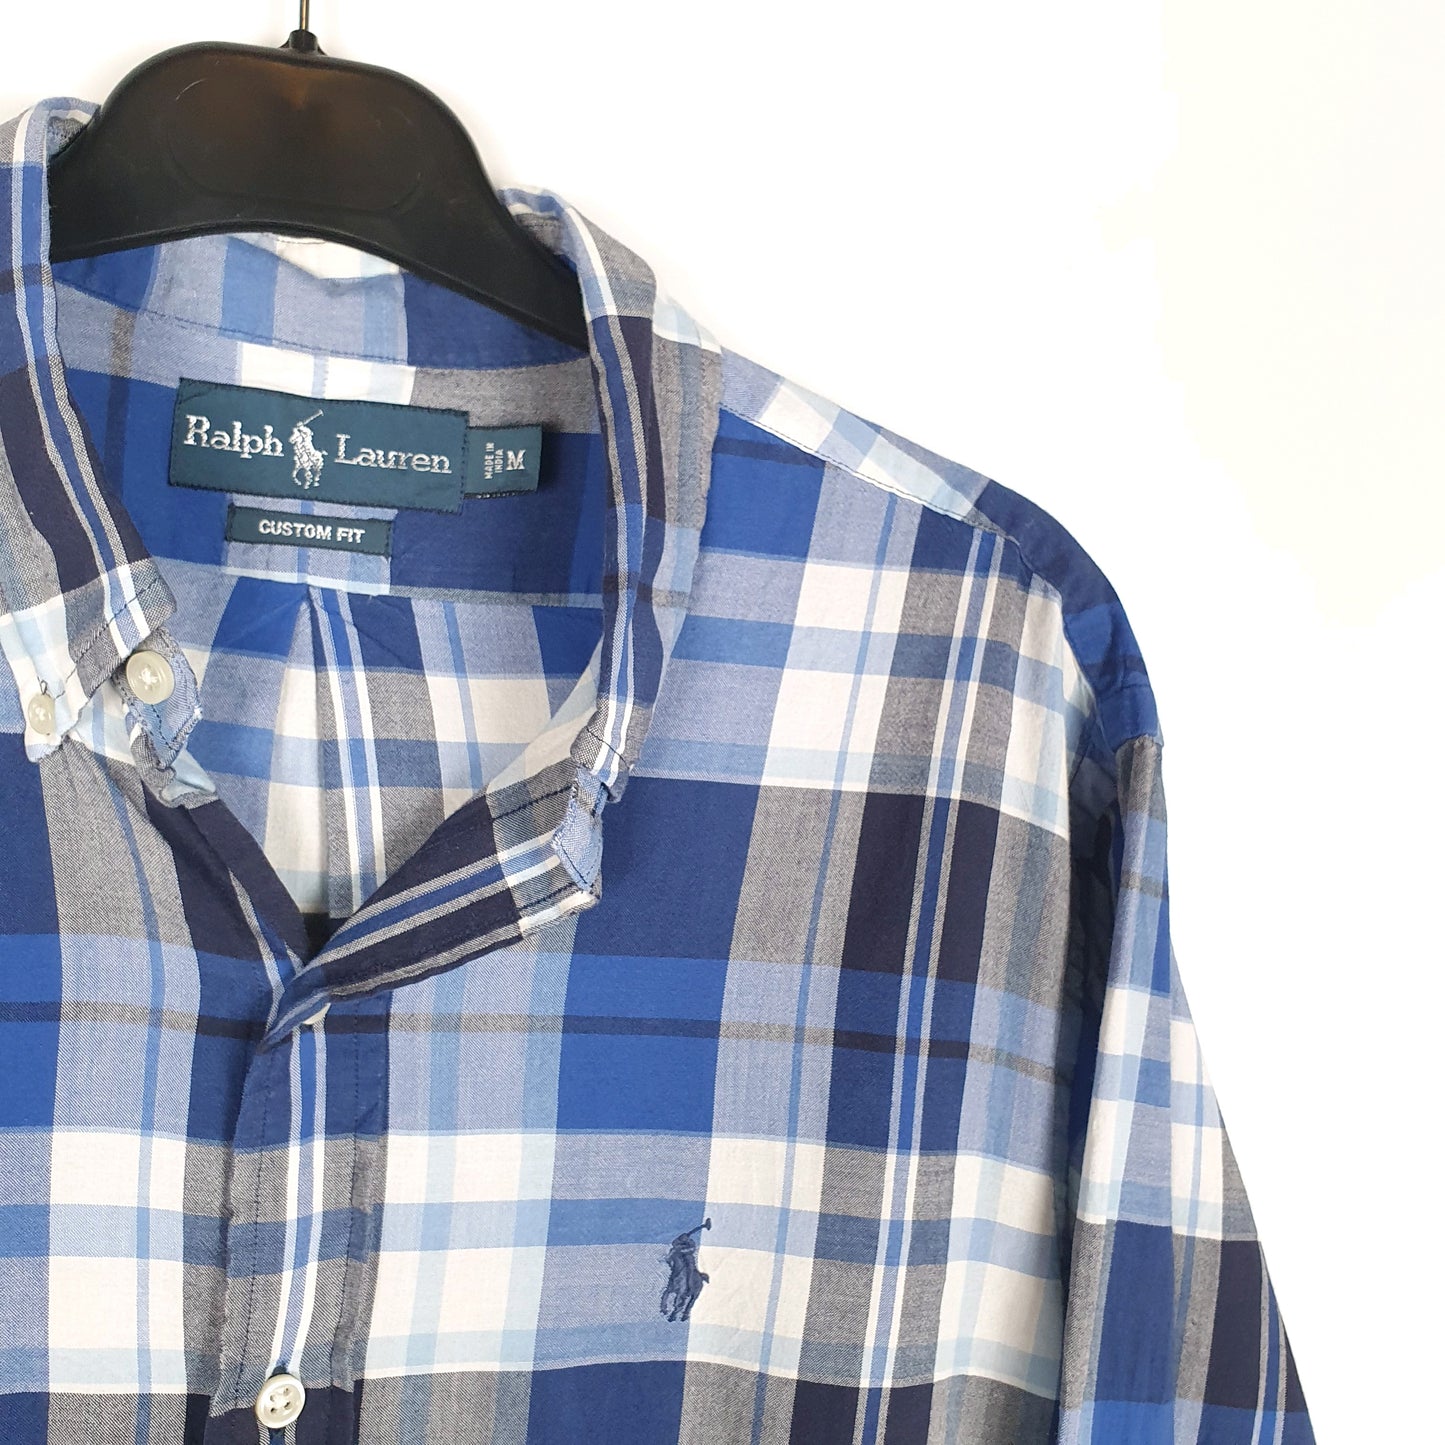 Polo Ralph Lauren Long Sleeve Custom Fit Check Shirt